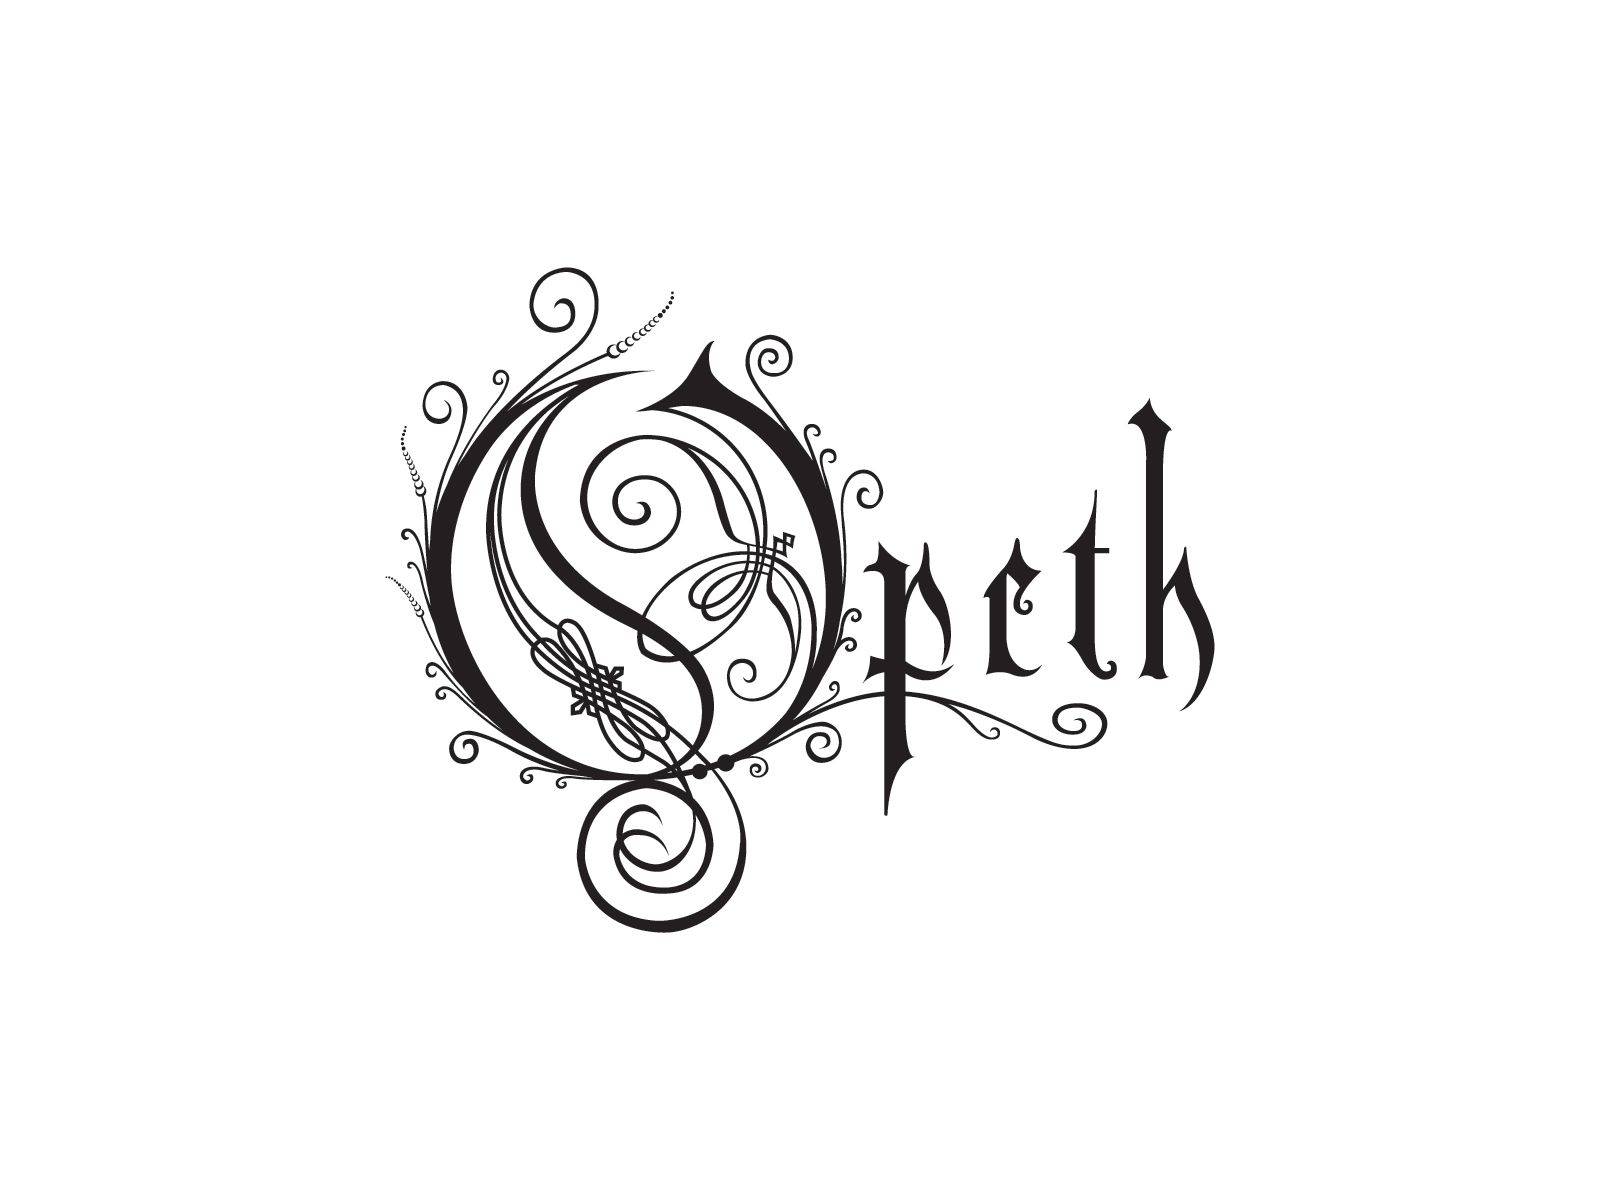 Opeth logo and wallpaper | Band logos - Rock band logos, metal ...